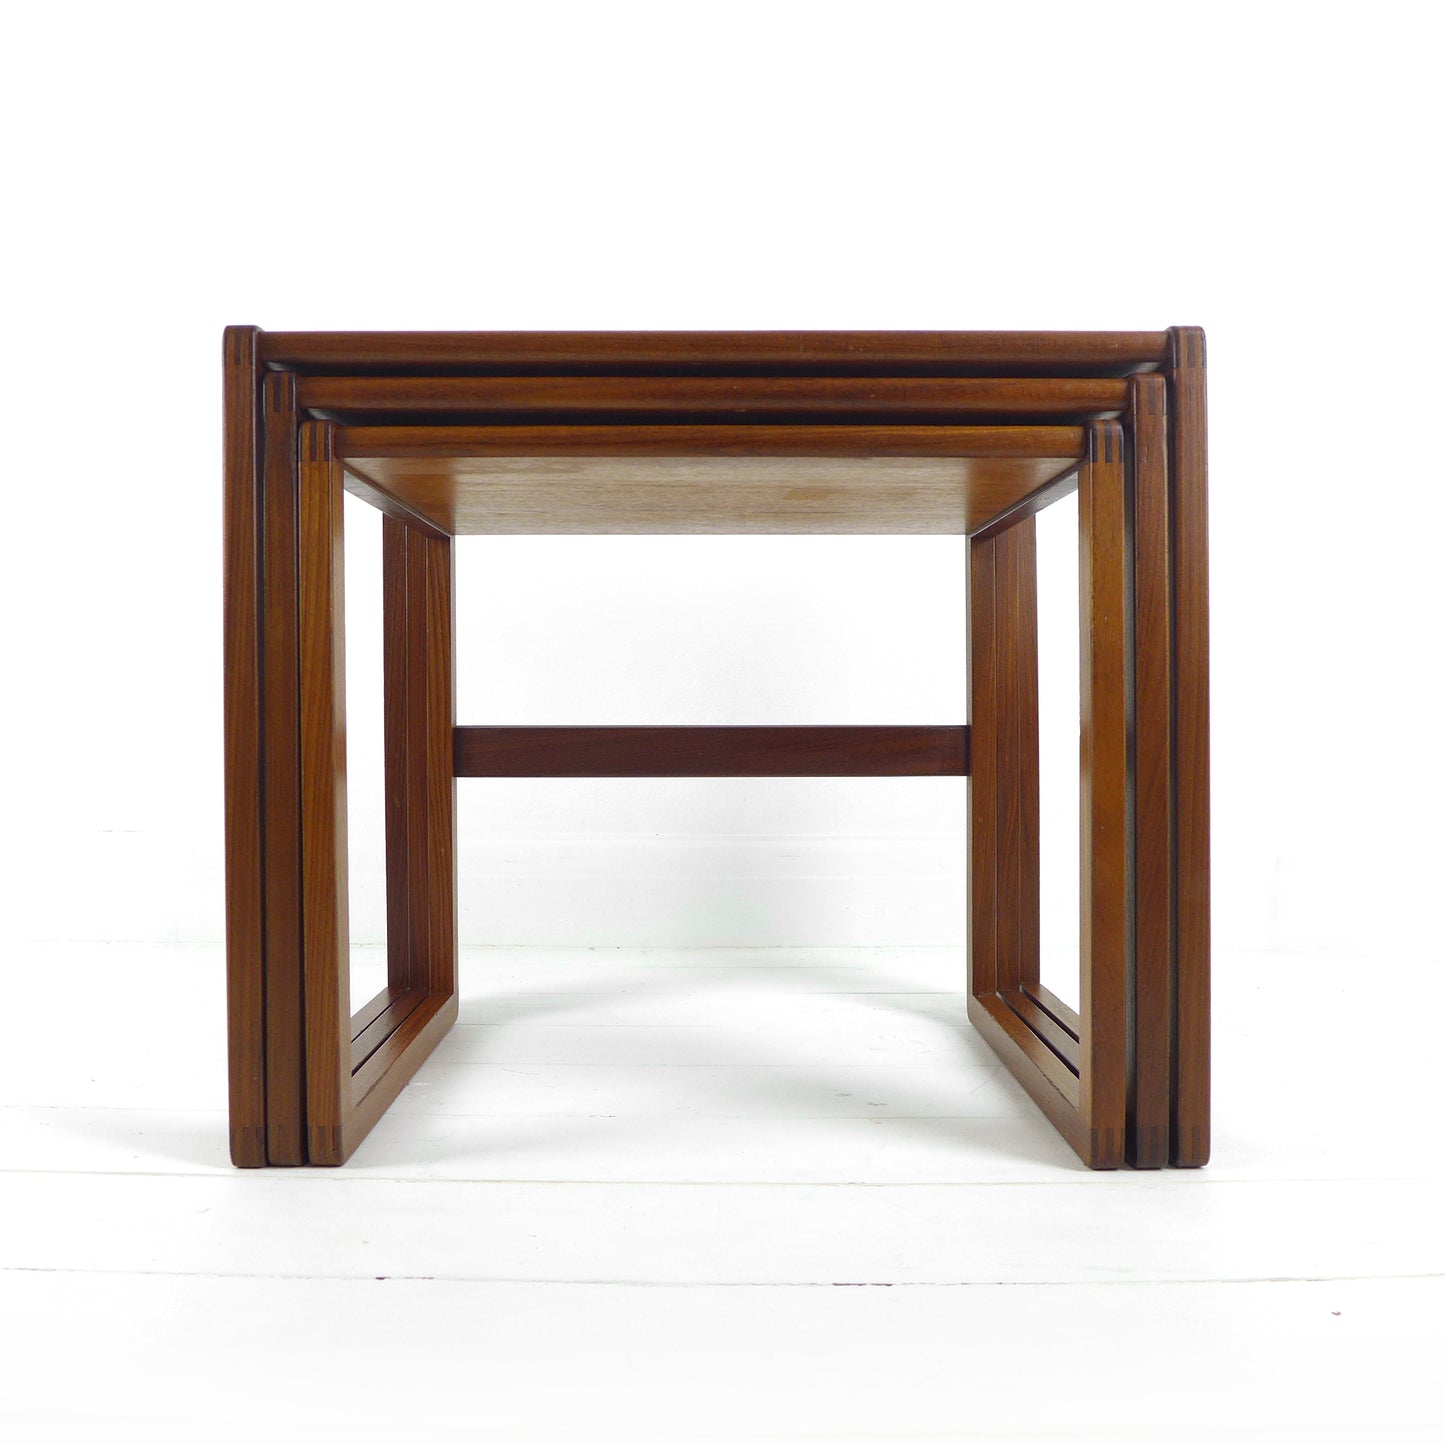 Vintage Teak G PLAN Nest of Tables - Mid Century Modern